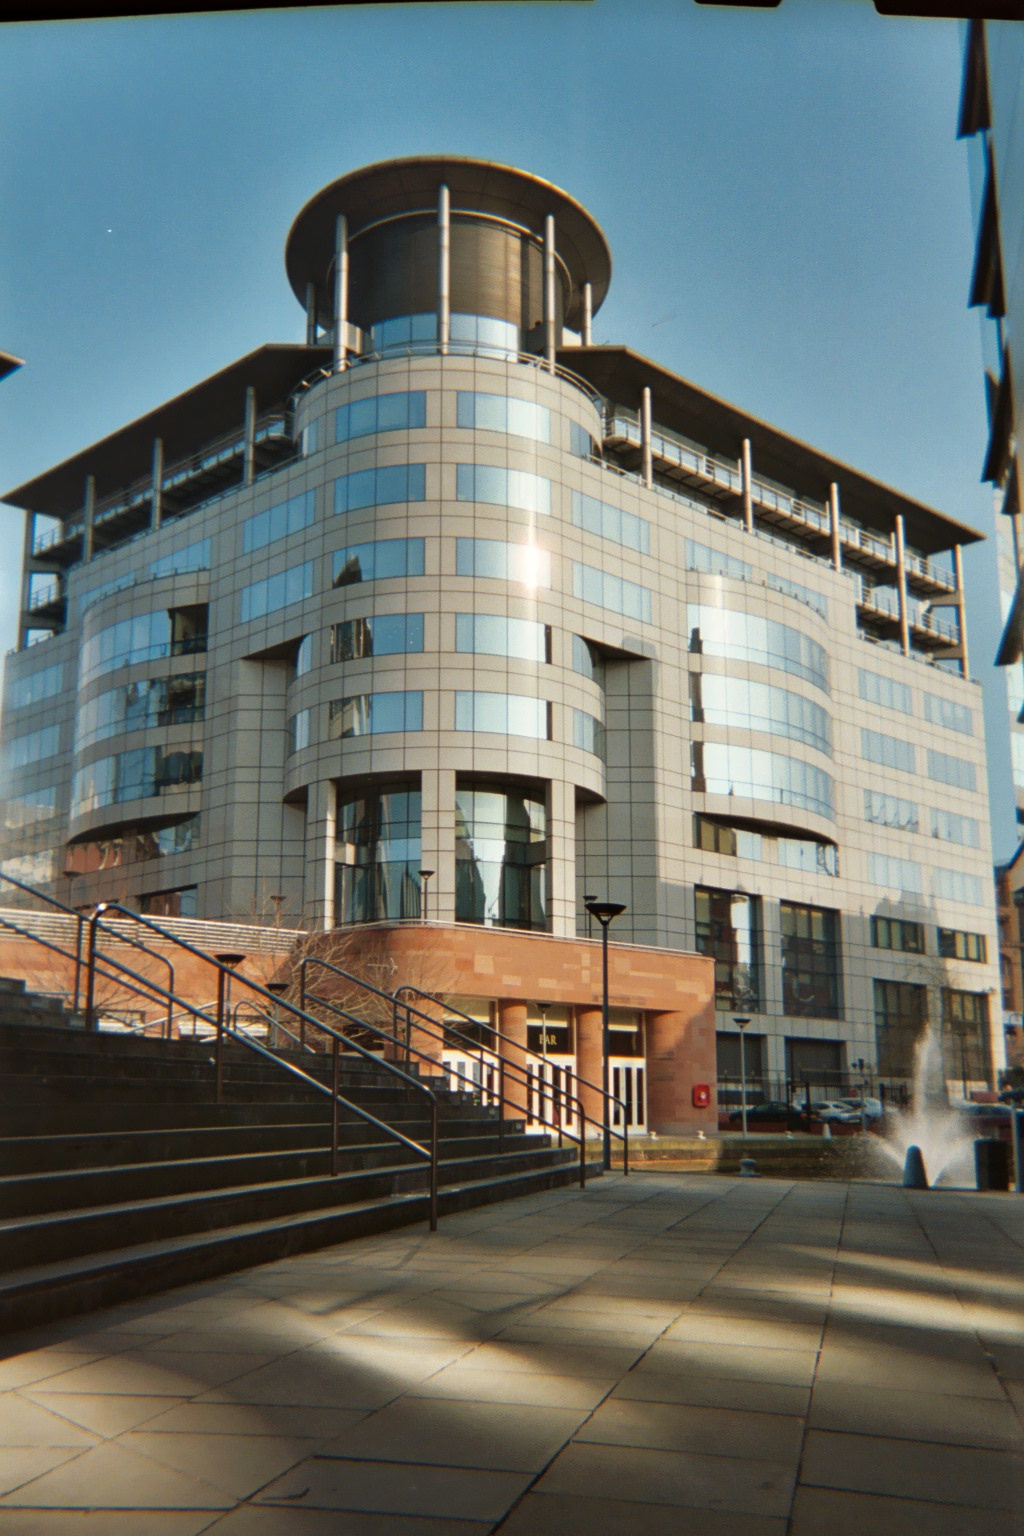 Barbirolli building, Manchester